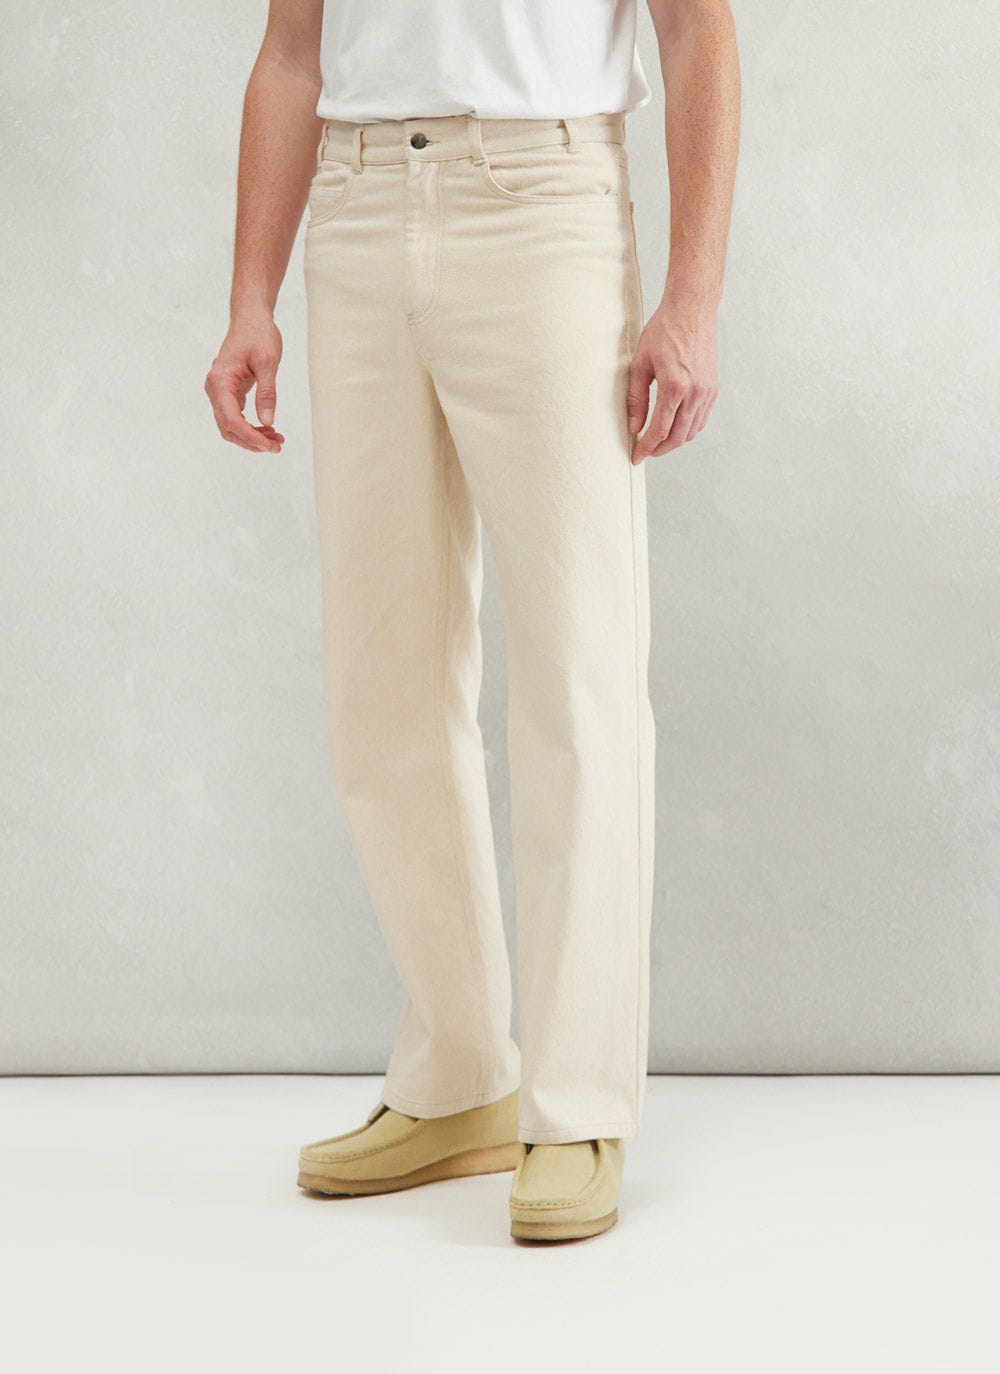 Buy Calvin Klein Mens Refined Cotton Twill Pant Black 33W 30L at  Amazonin